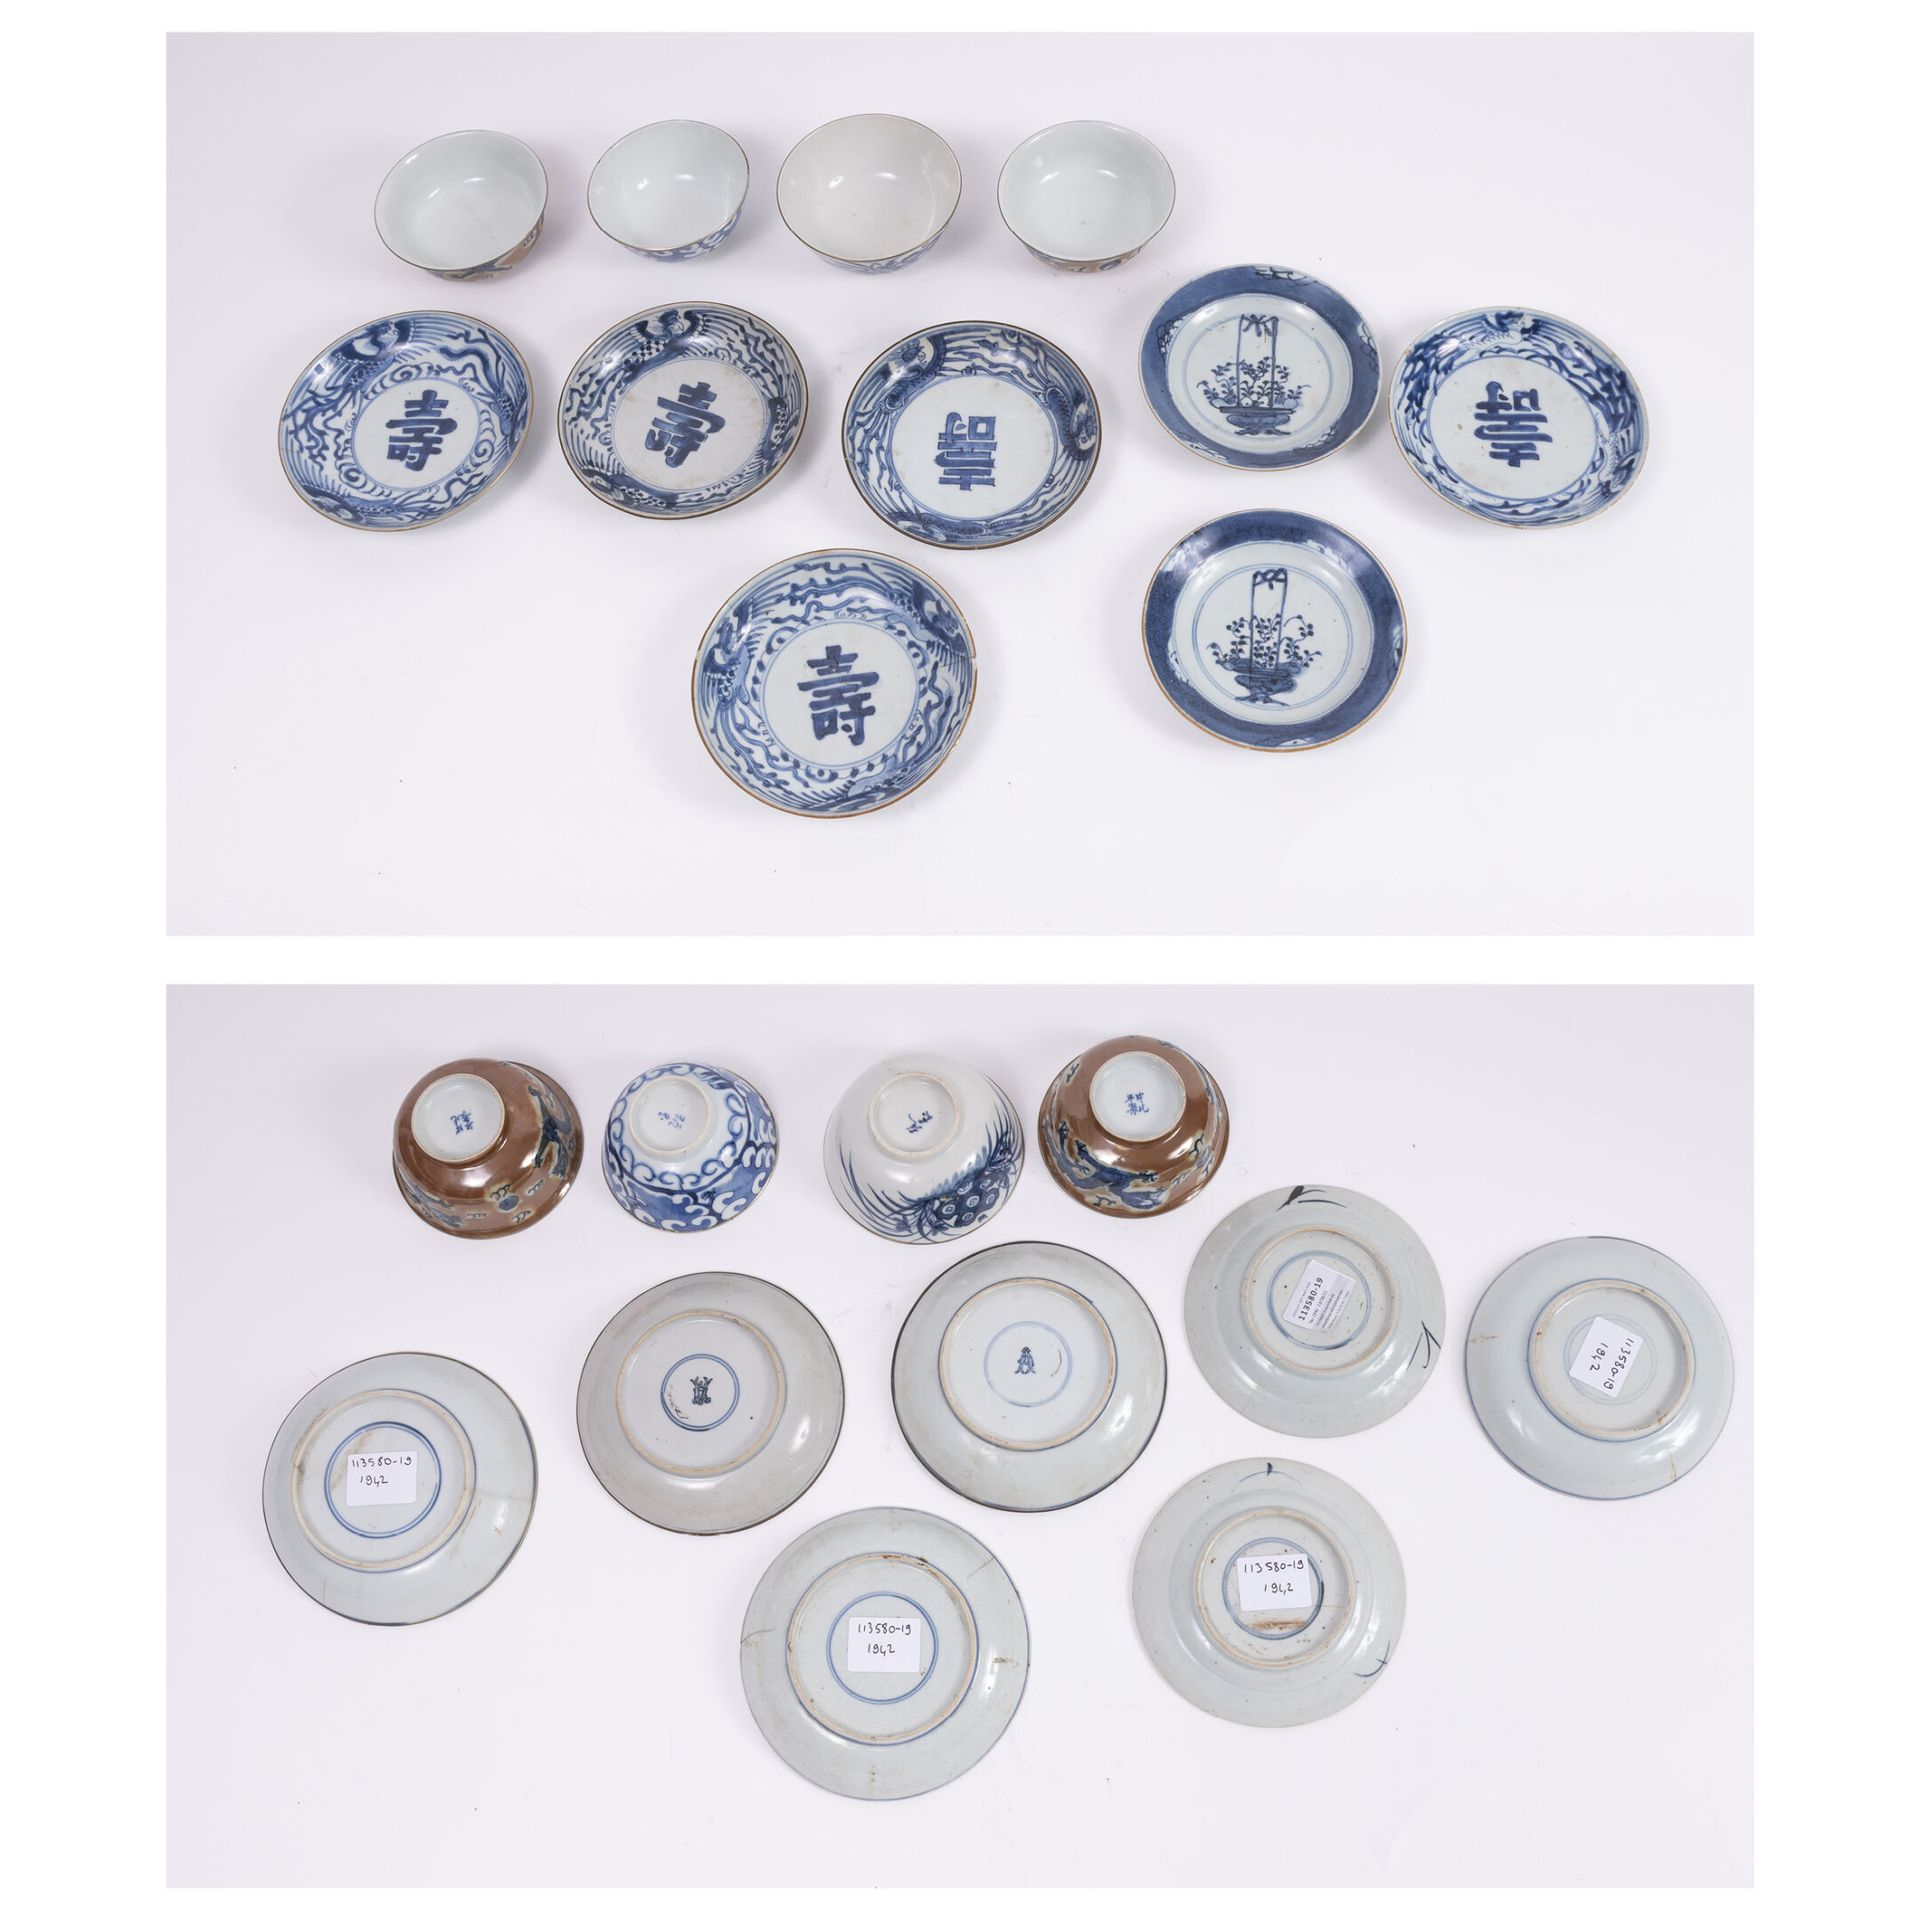 CHINE ou COREE, XIXème-XXème siècles 一套瓷器，有些有书法。

- 5个碟子，白蓝相间的凤凰和象形文字的装饰。

直径：16&hellip;